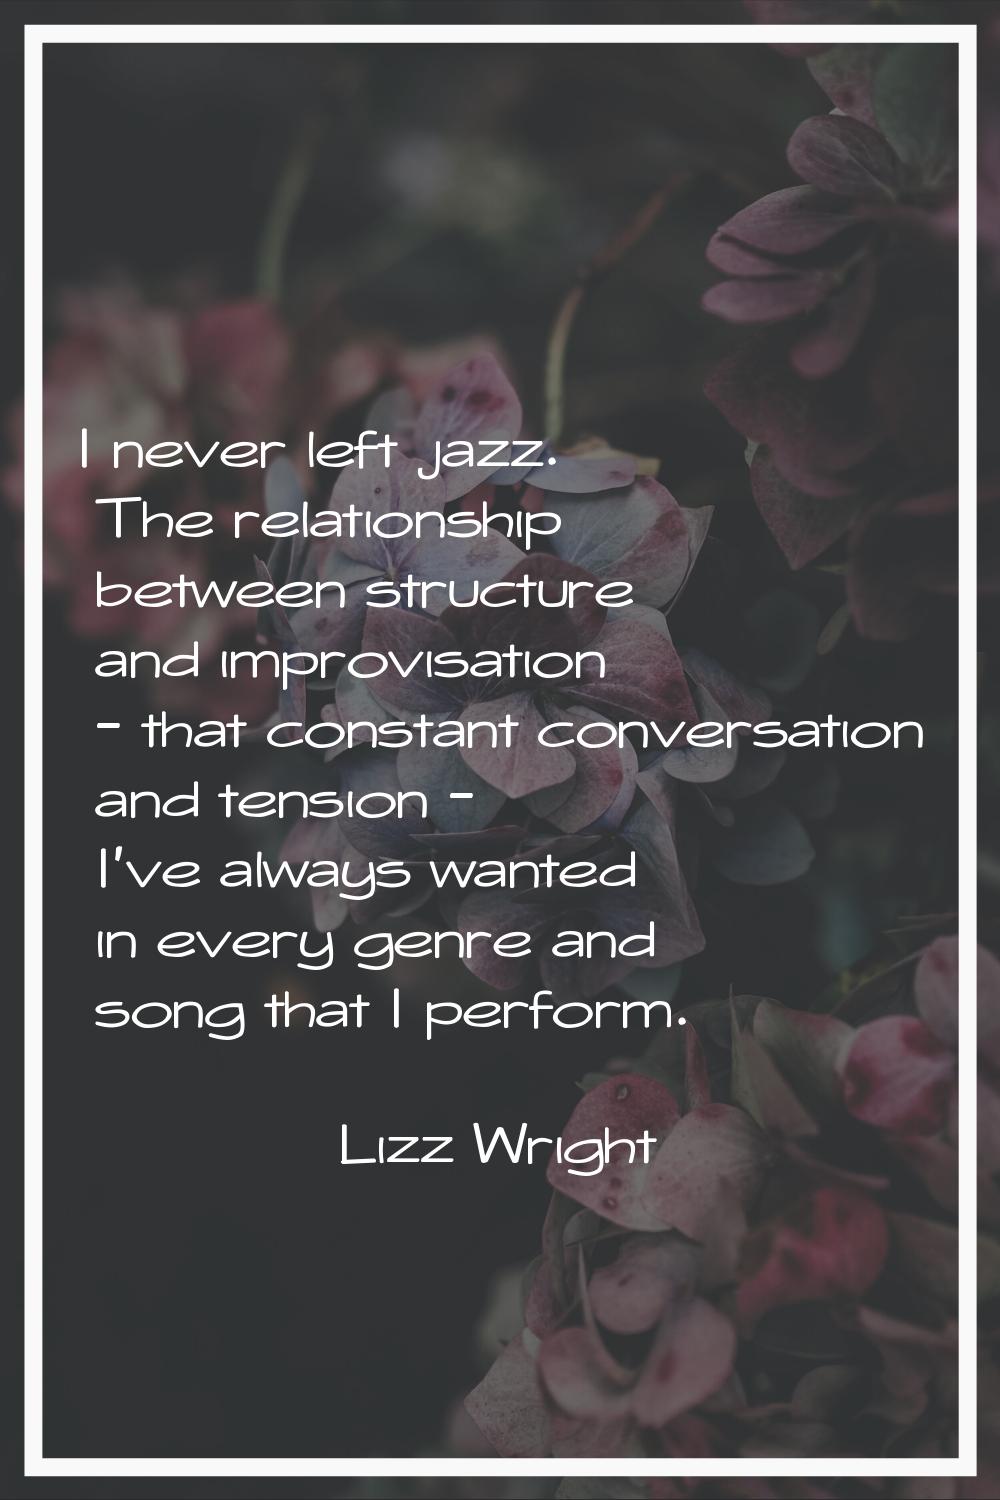 I never left jazz. The relationship between structure and improvisation - that constant conversatio